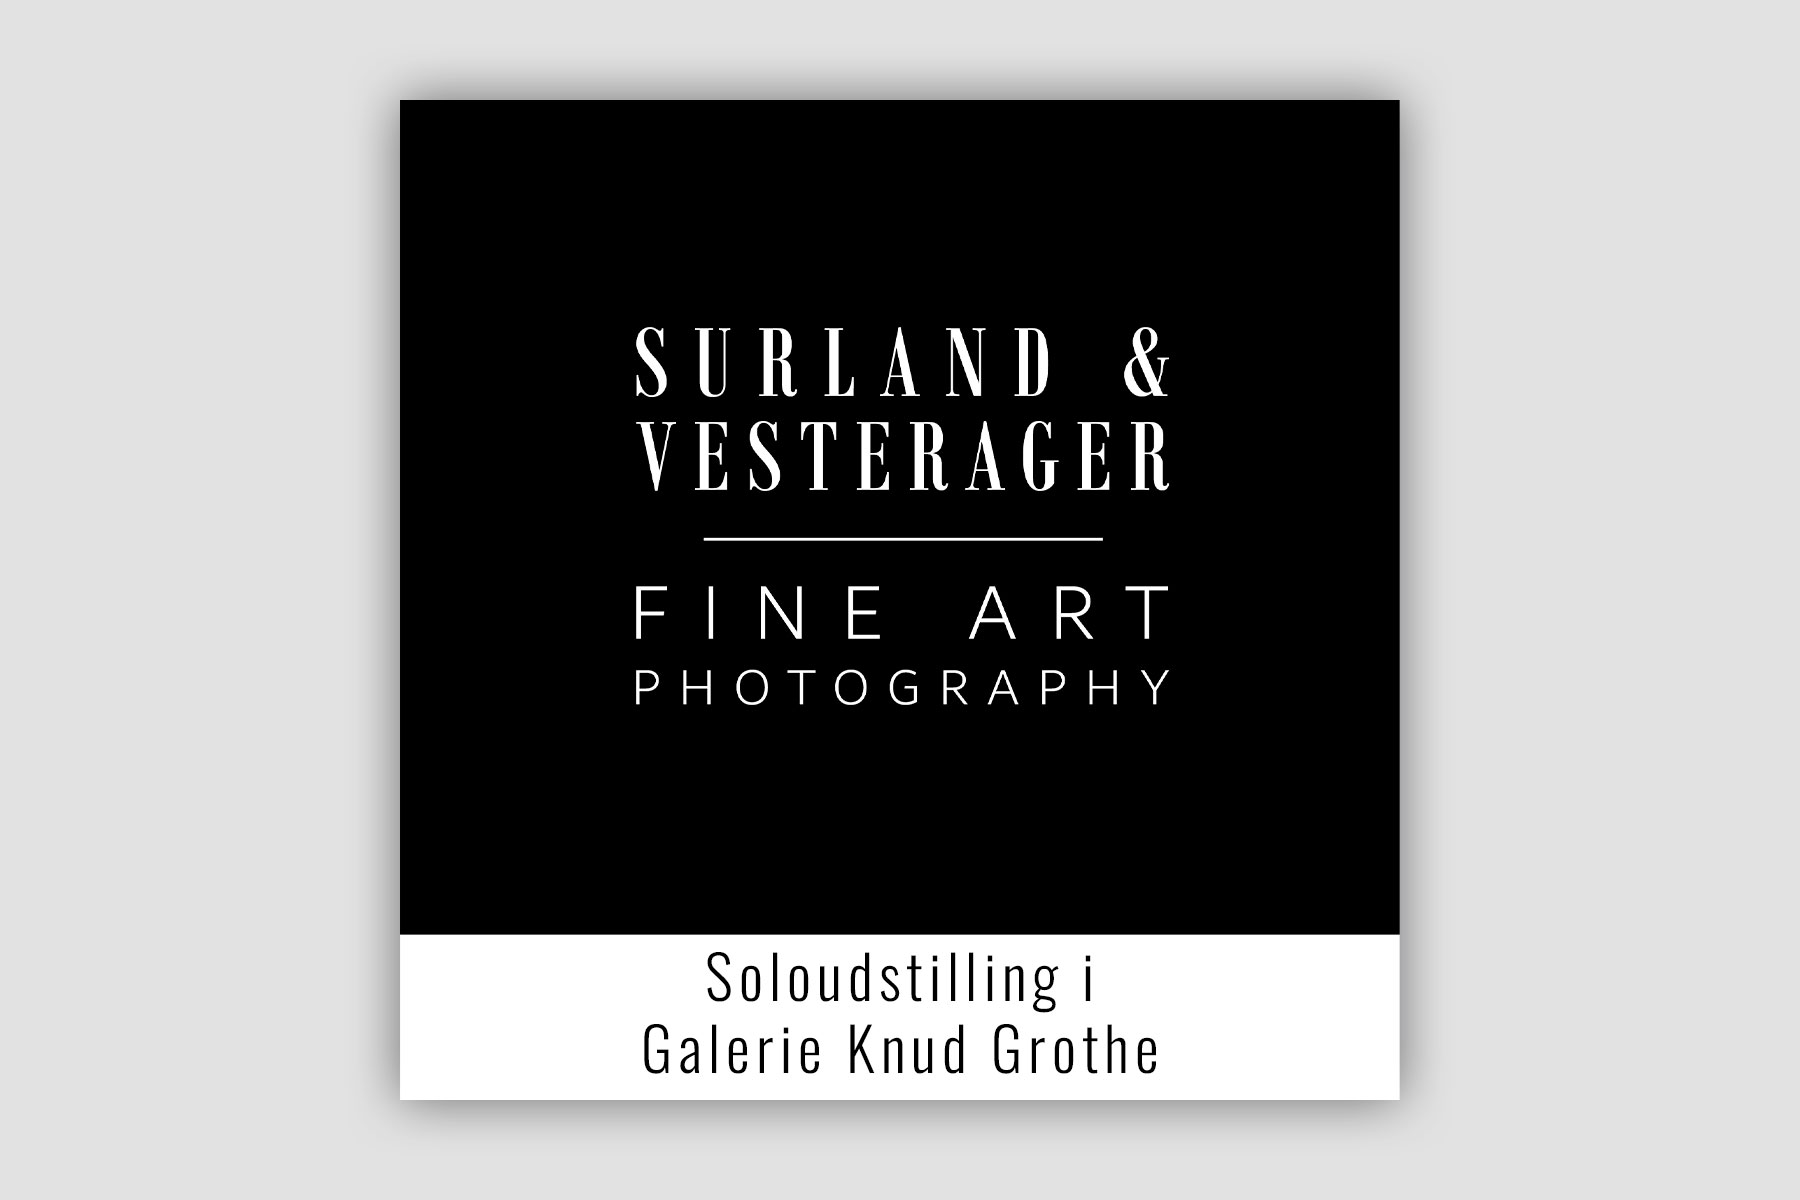 Surland & Vesterager Fine Art Photography